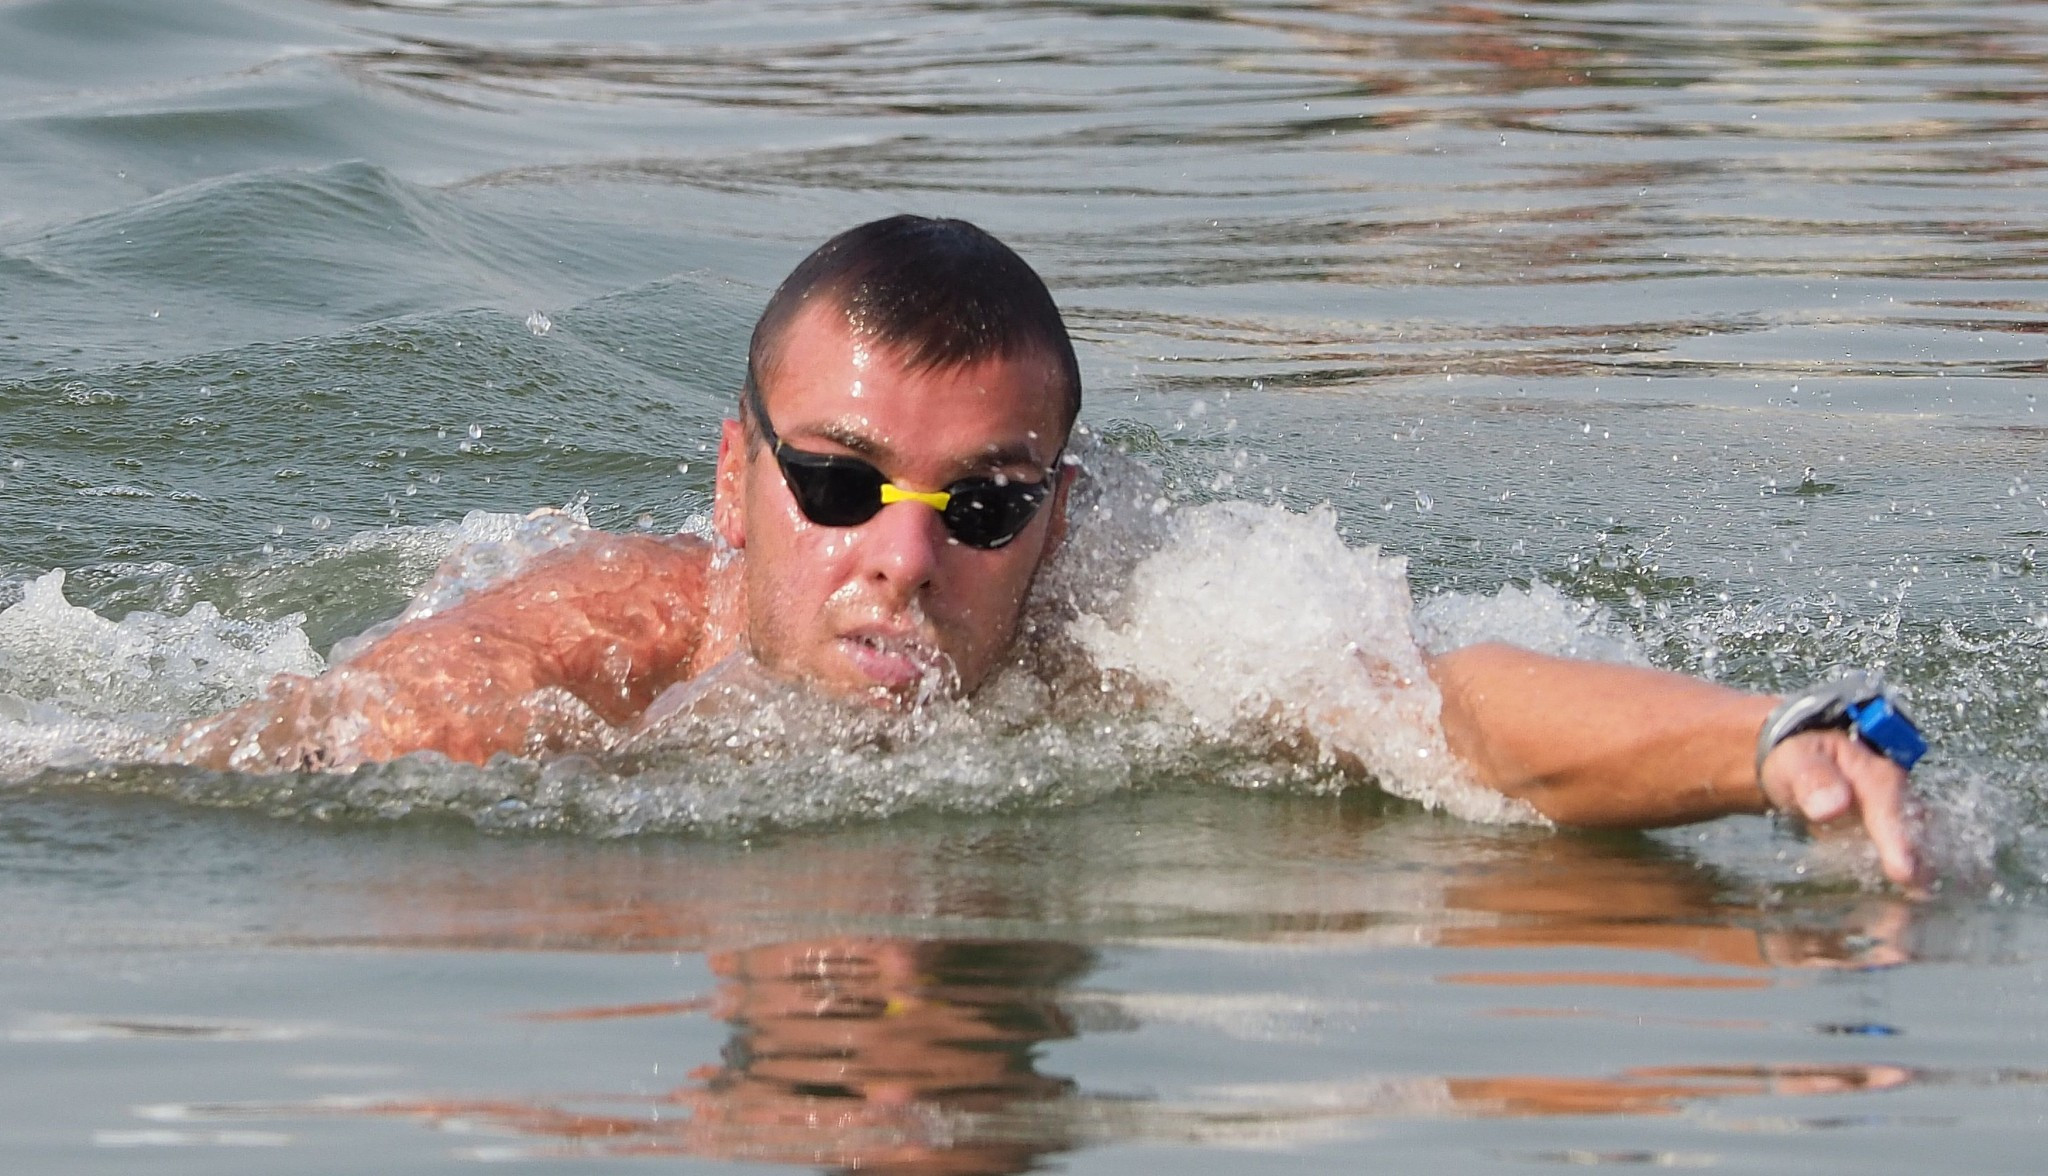 Italy's Gregorio Paltrinieri won the men's 10km marathon swimming race ©Taipei 2017